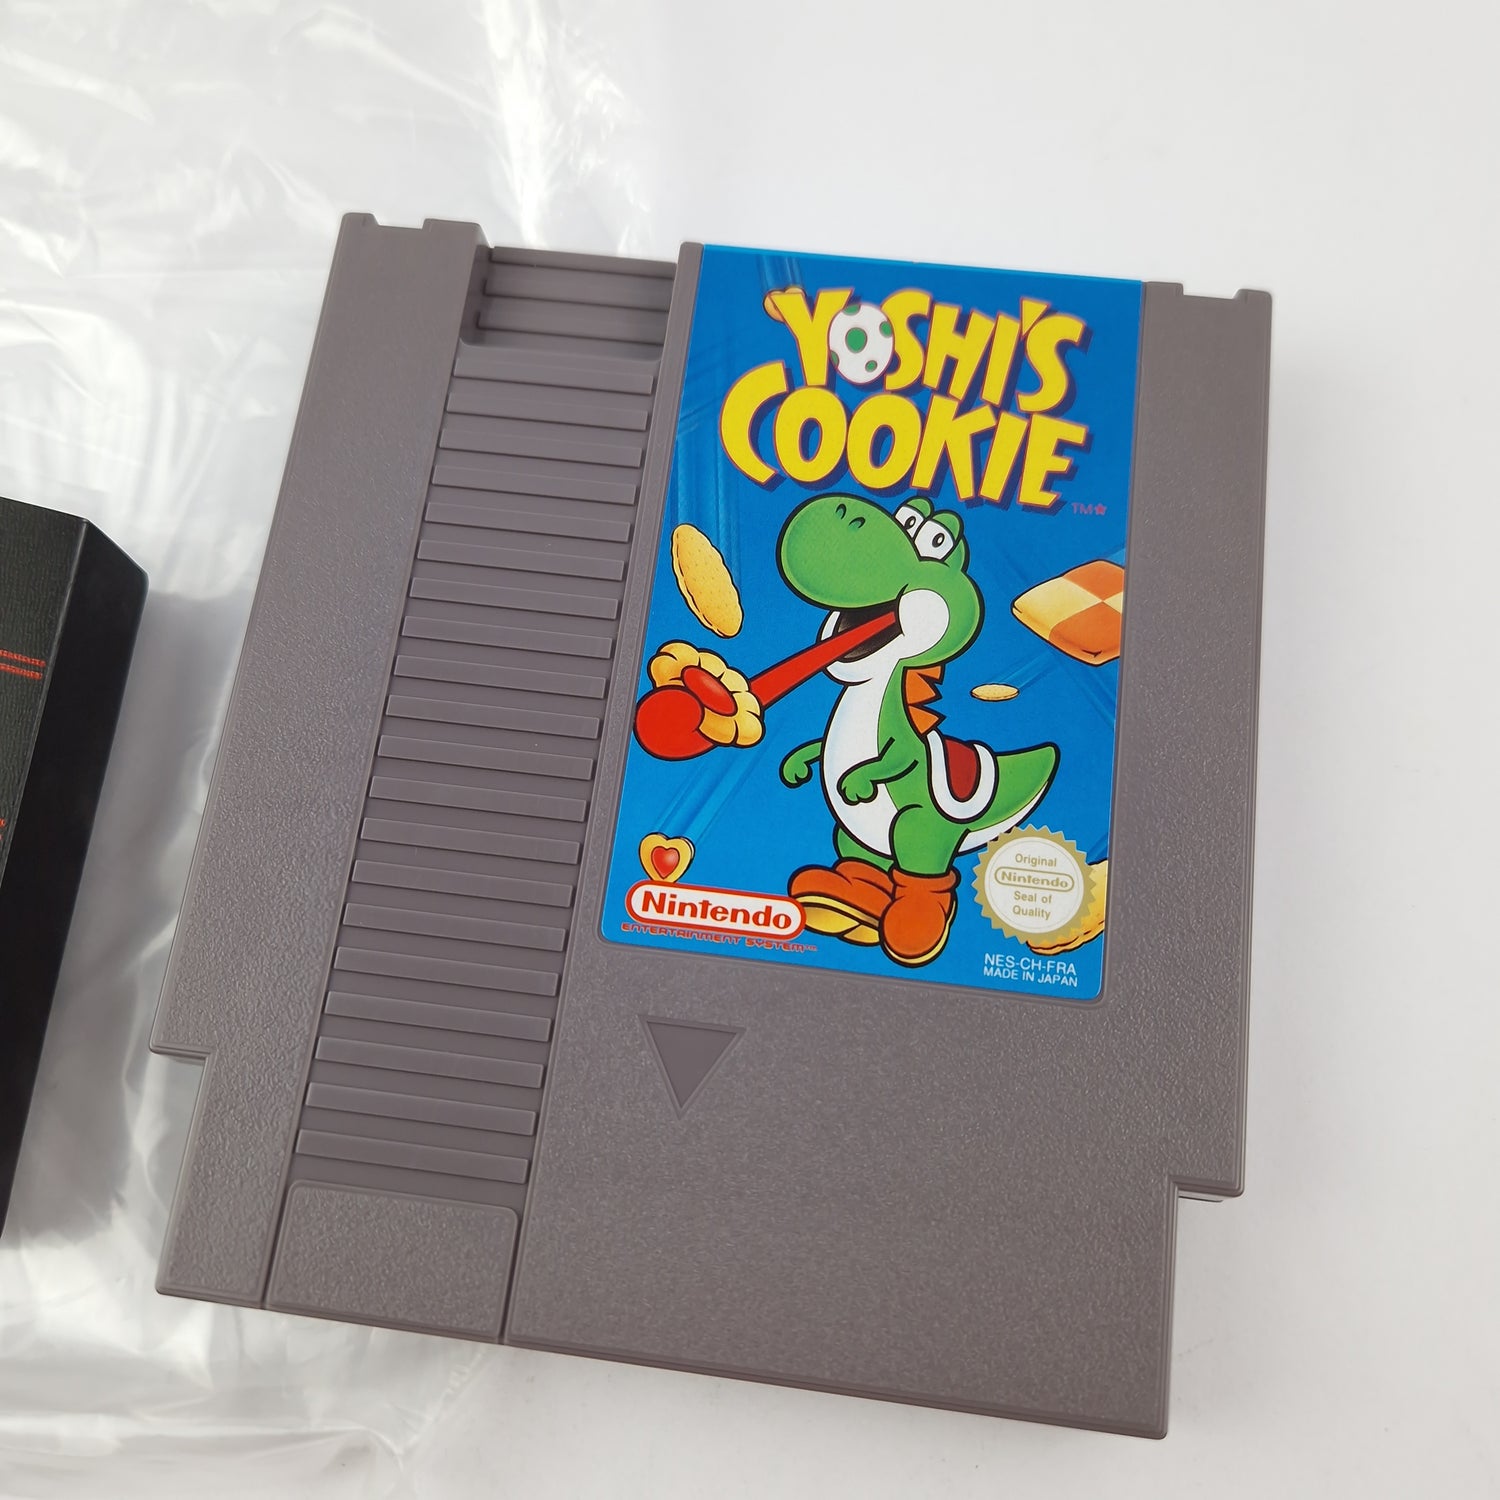 Nintendo NES Game: Yoshi's Cookie - Module Cartridge Instructions OVP cib PAL